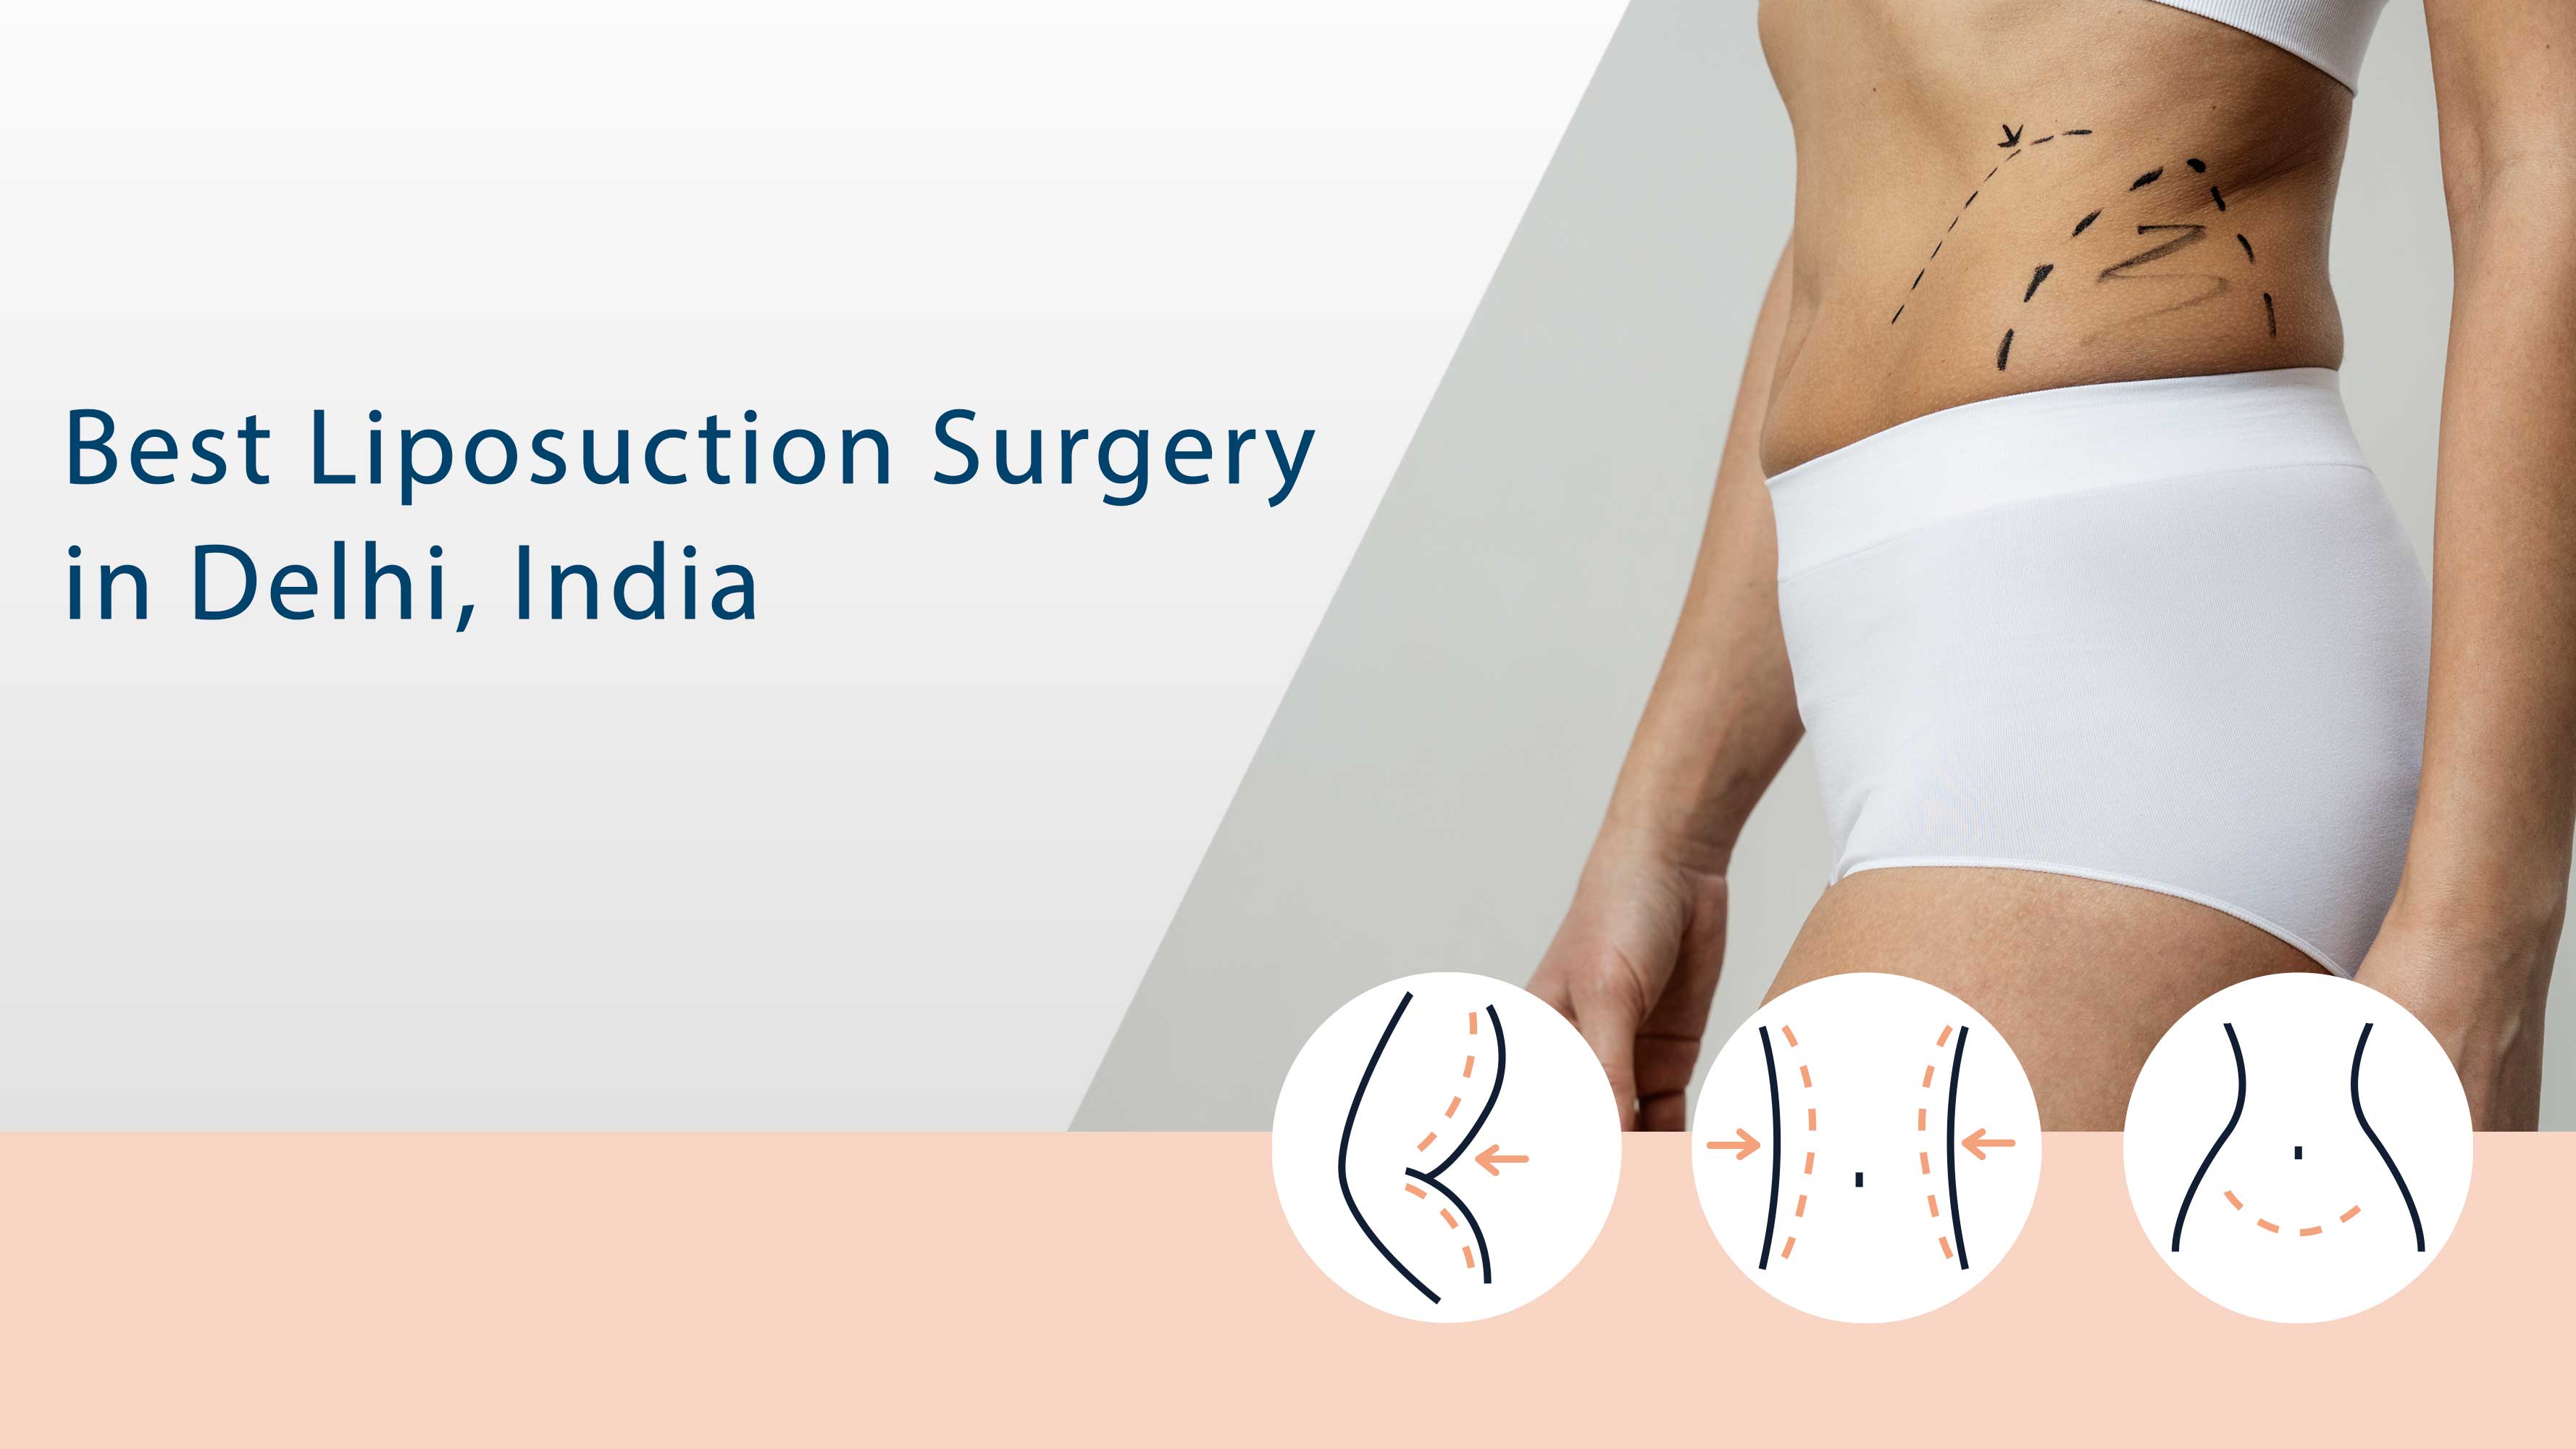 Best Liposuction Surgery in Delhi, India